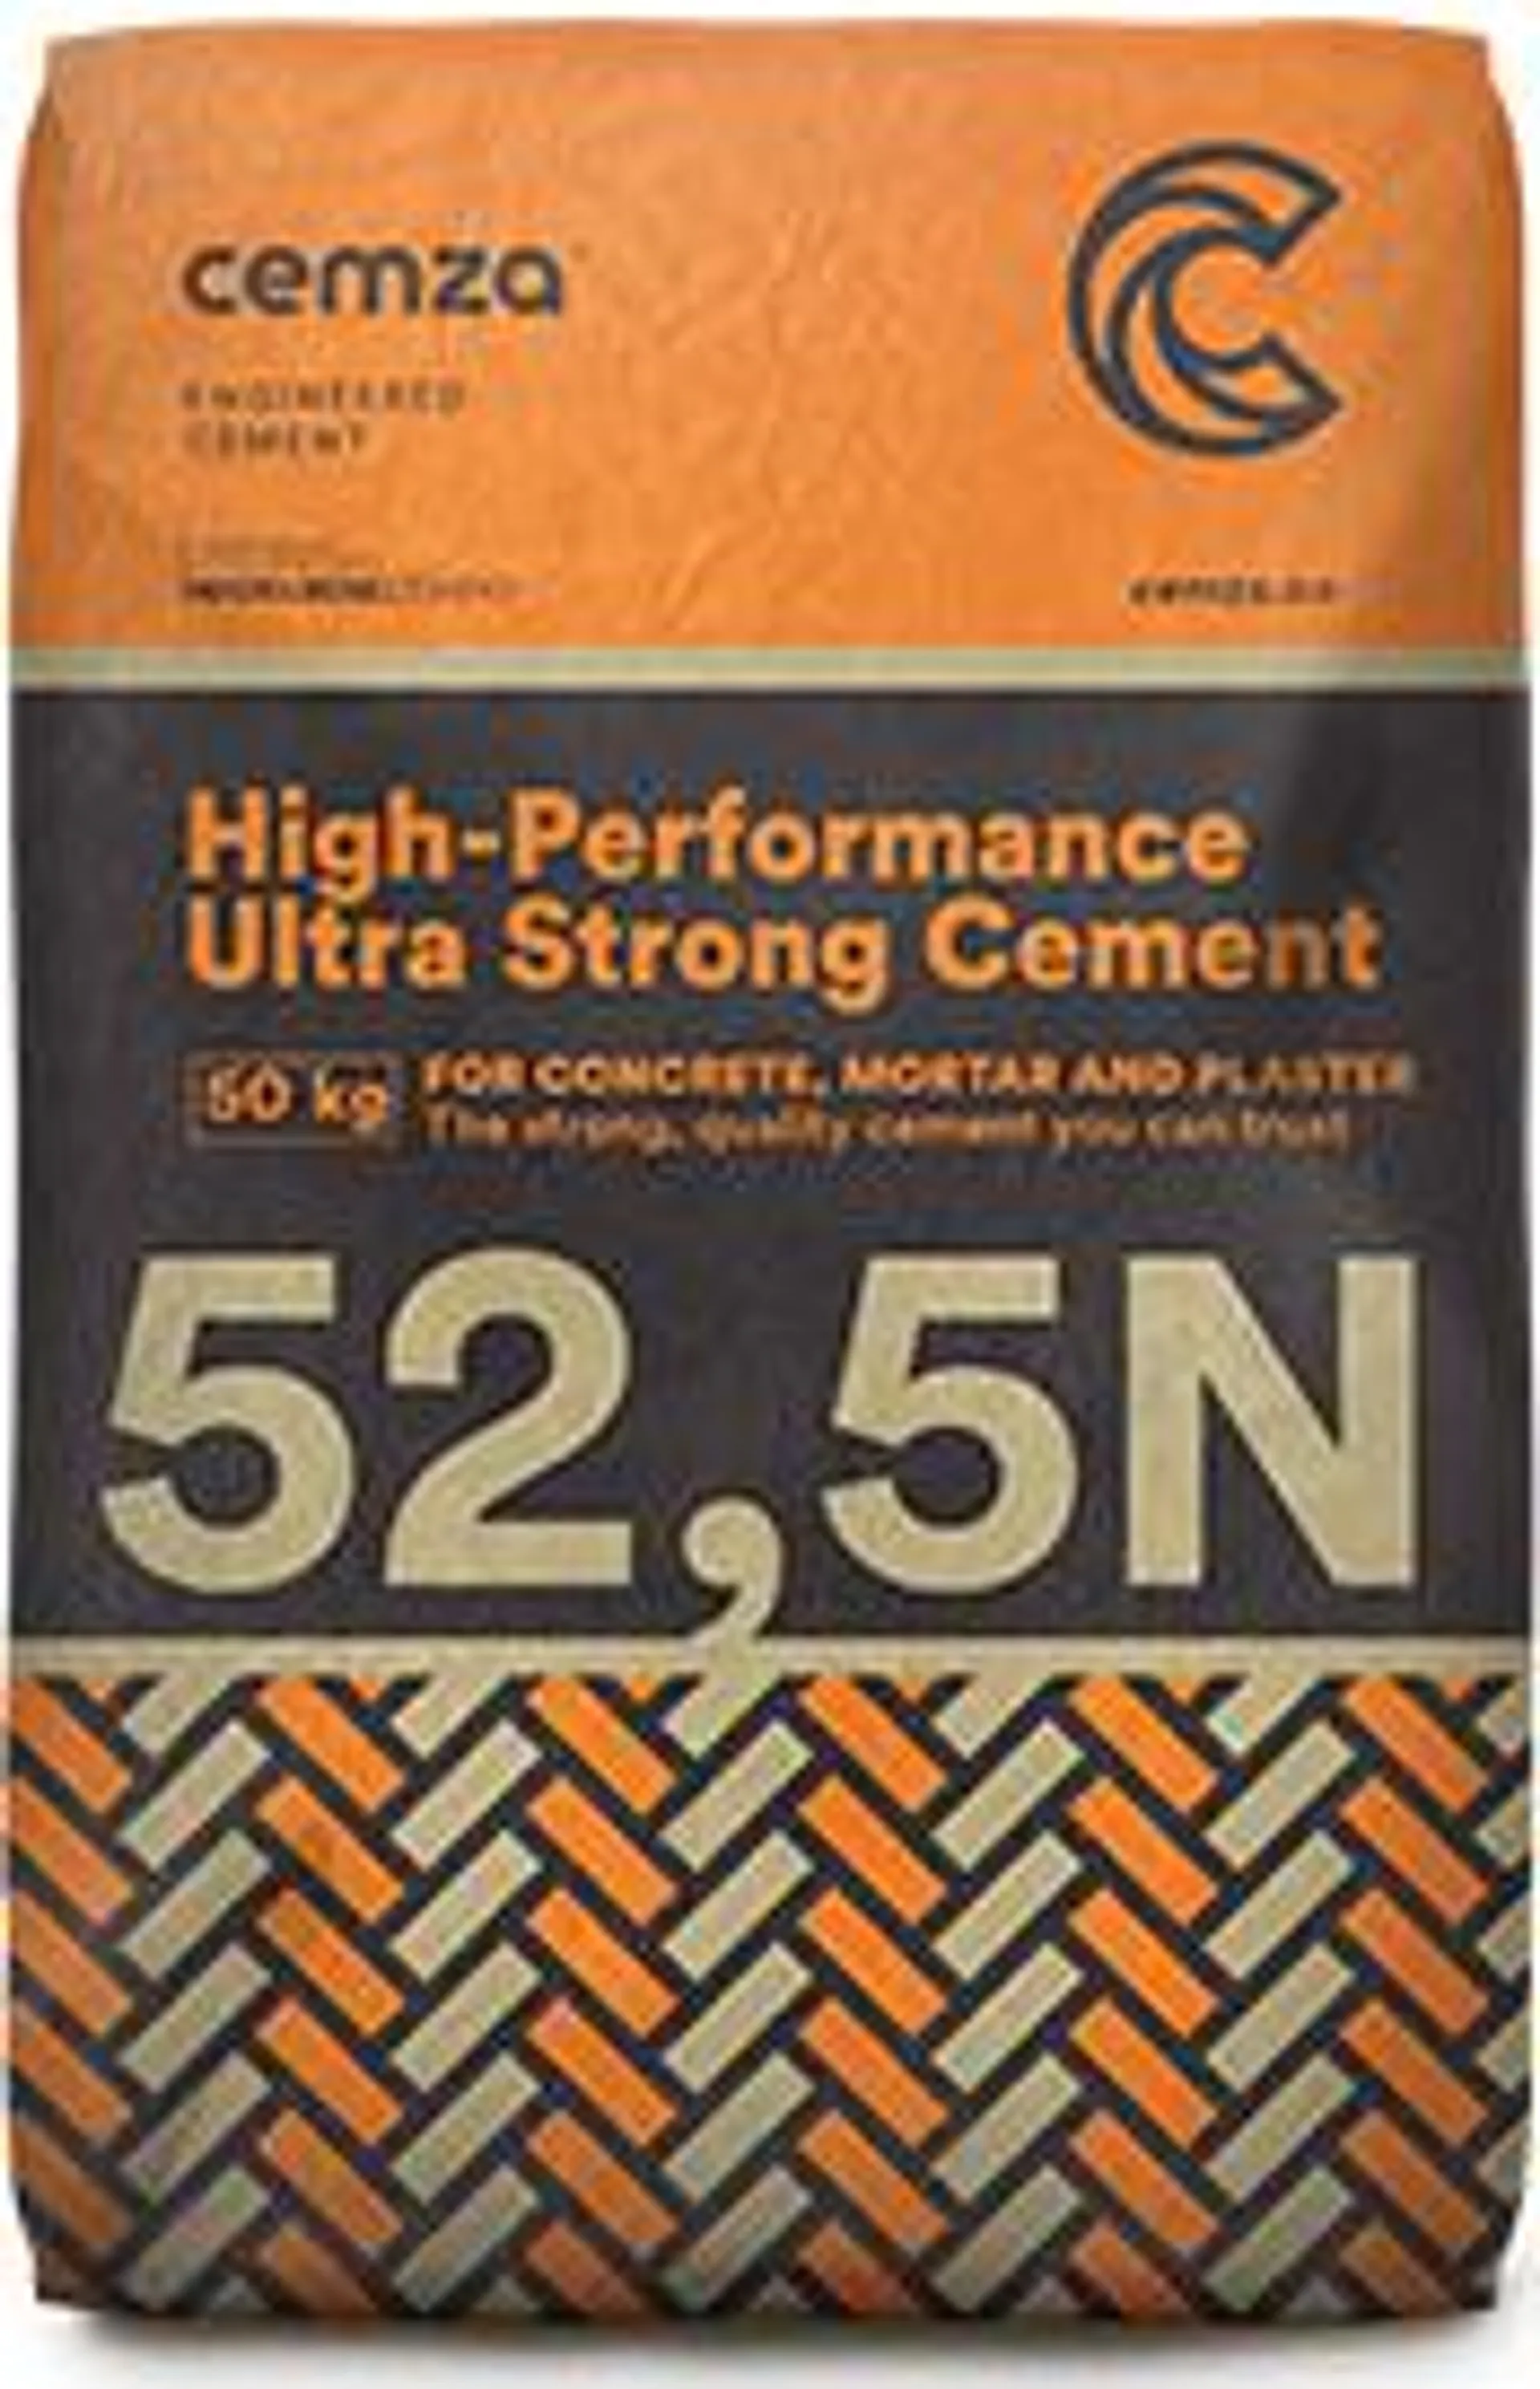 Cemza General Purpose Cement 52.5N 50kg